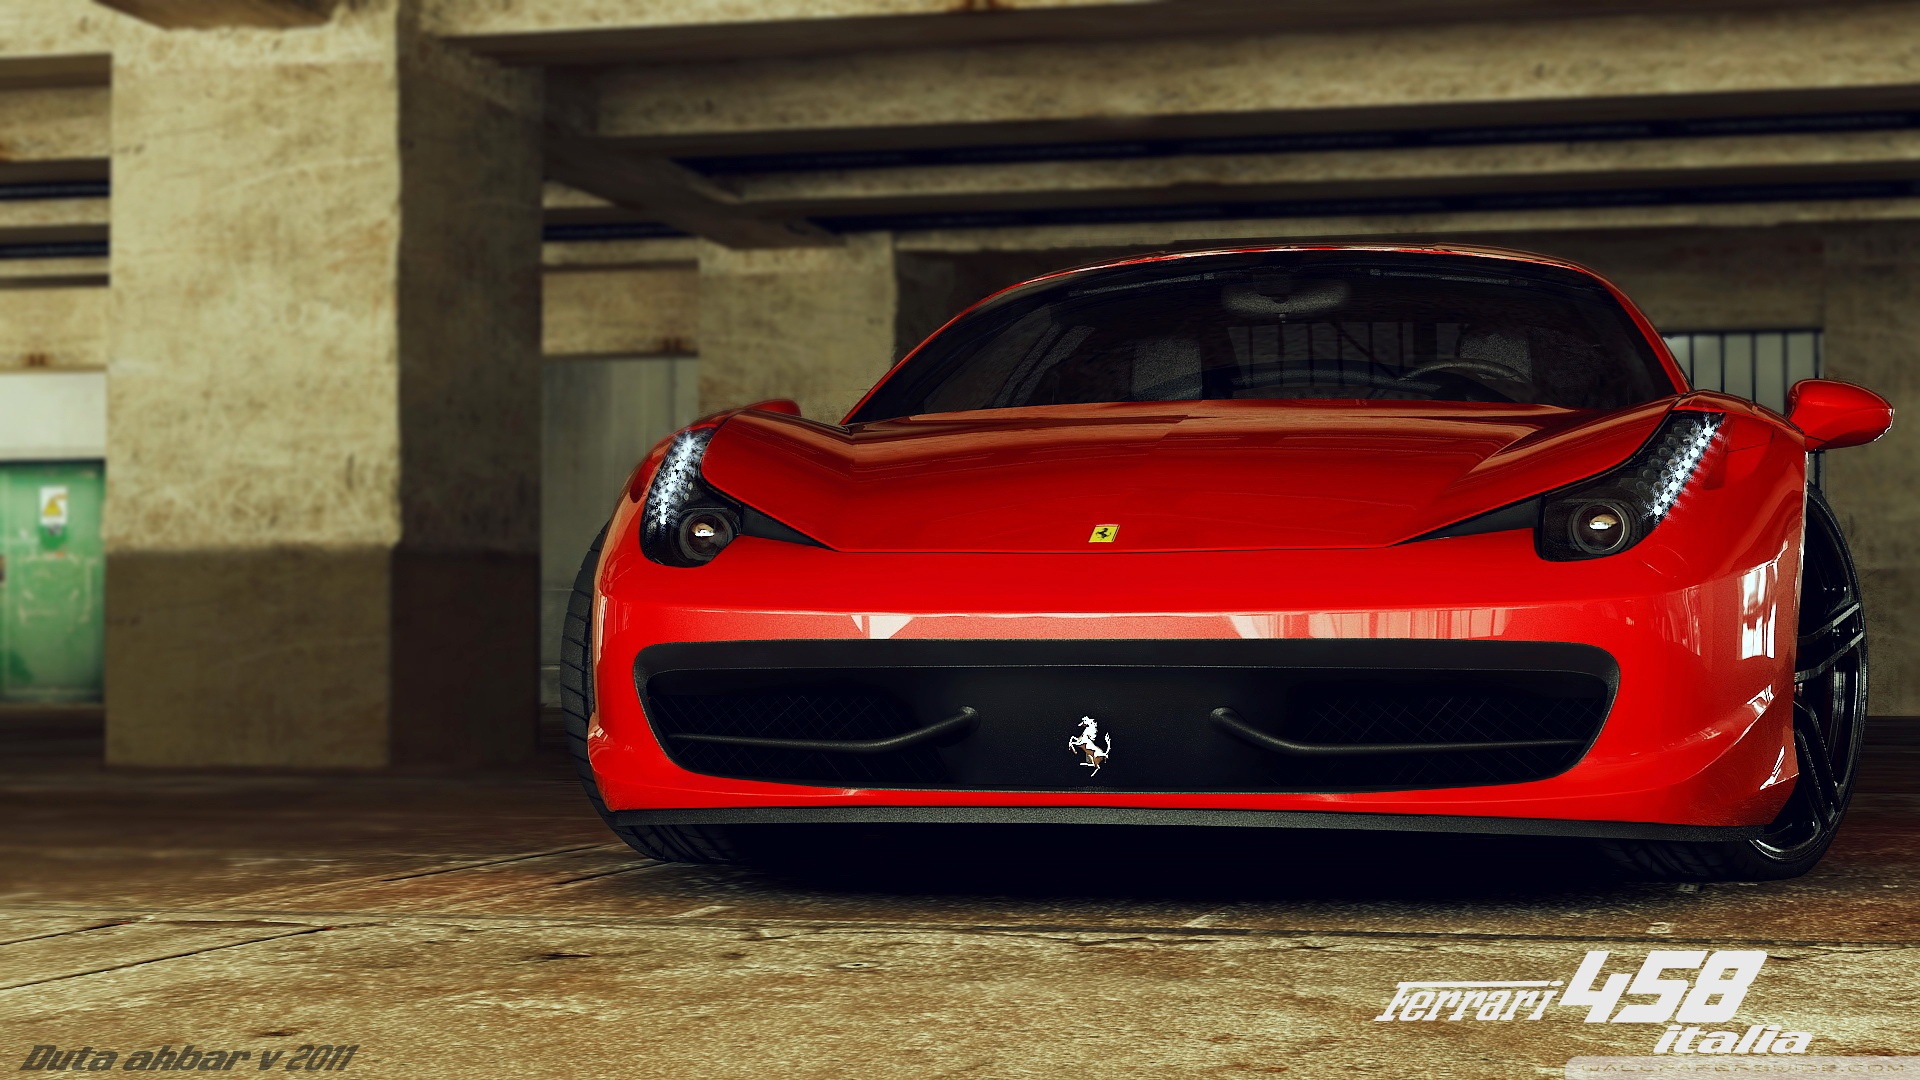 Ferrari Wallpaper Image Group